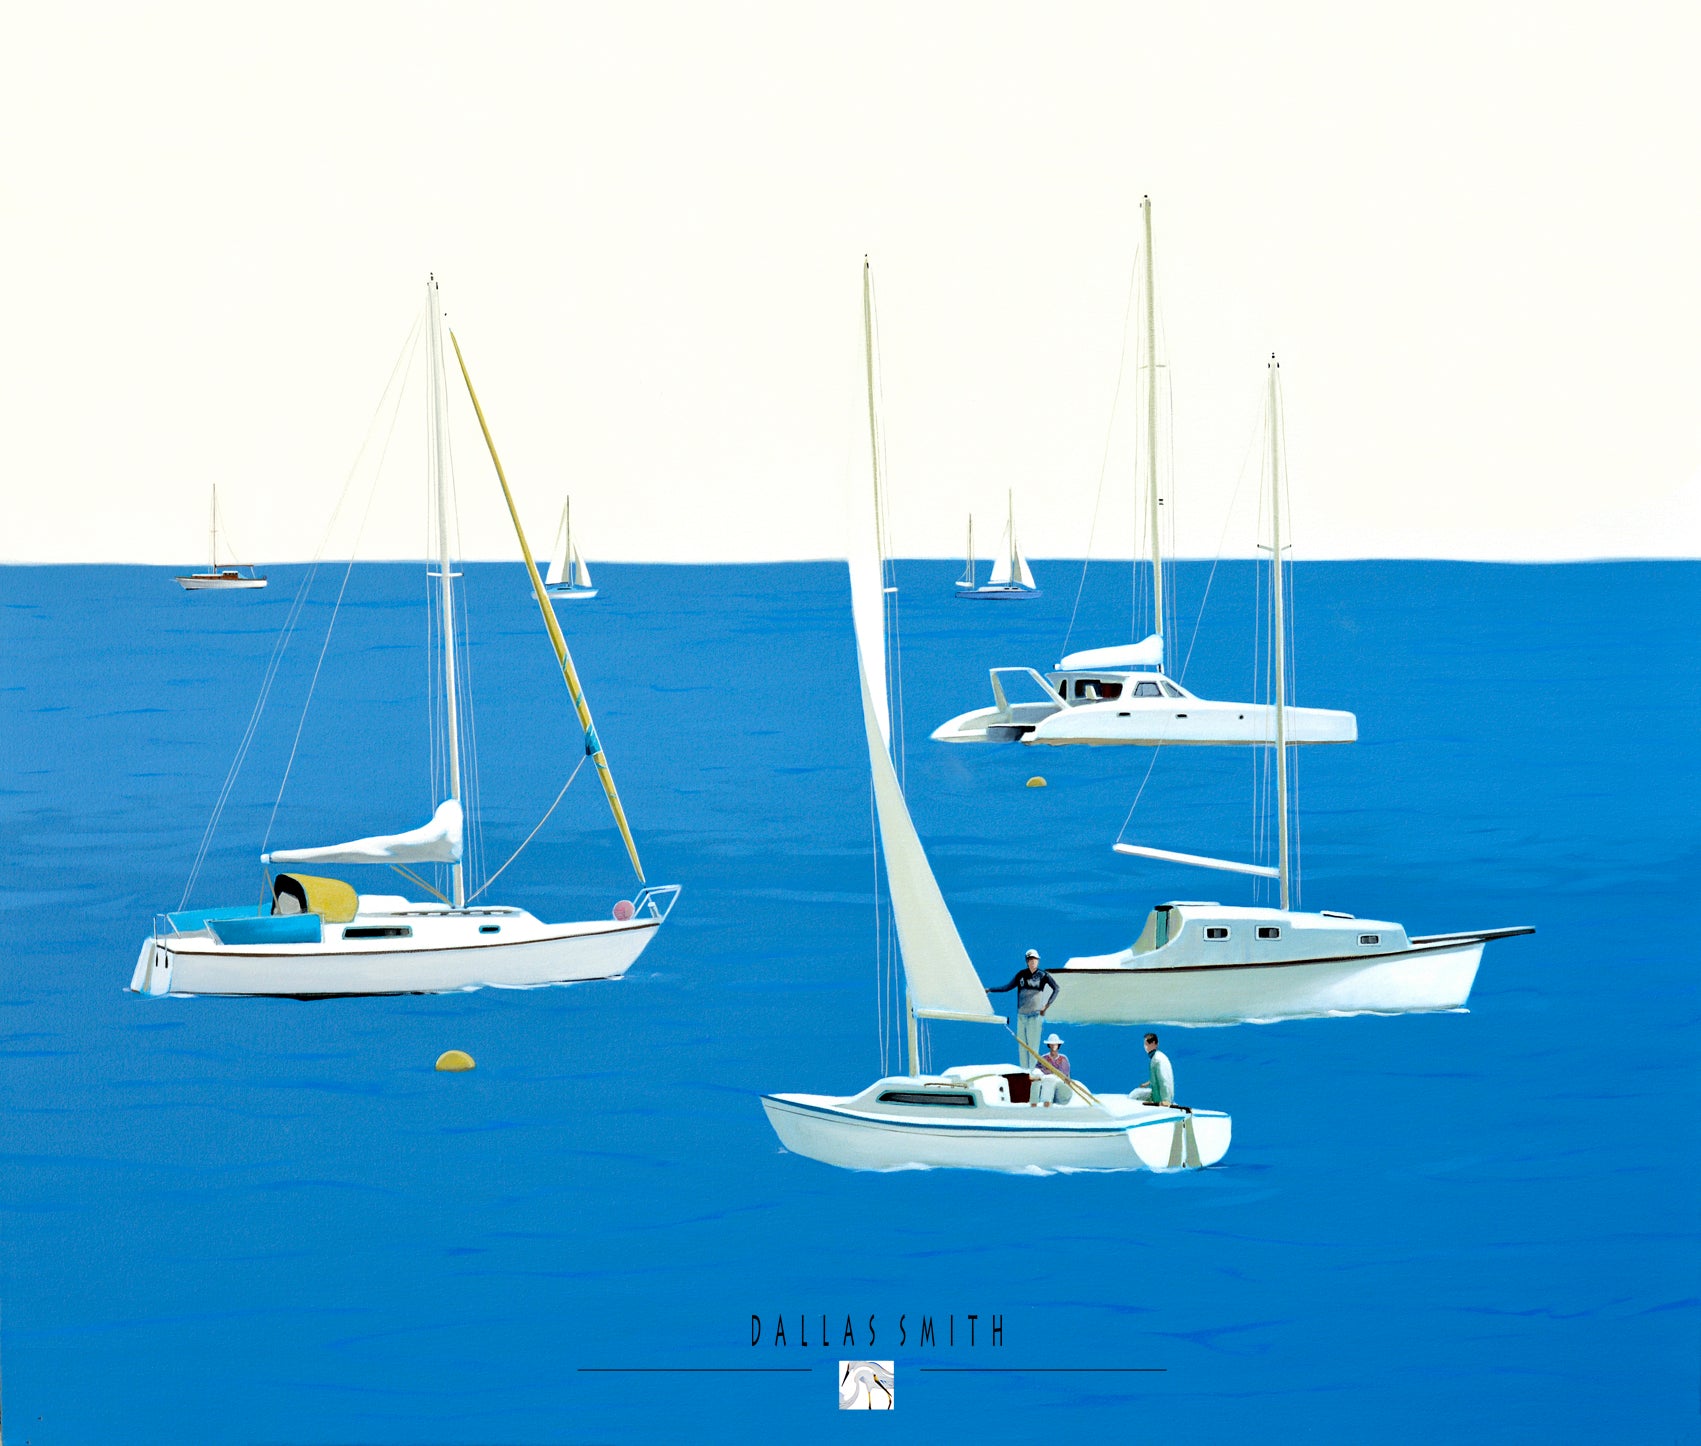 Top boat art online order sail boat print Beach house art Buy Yacht prints online